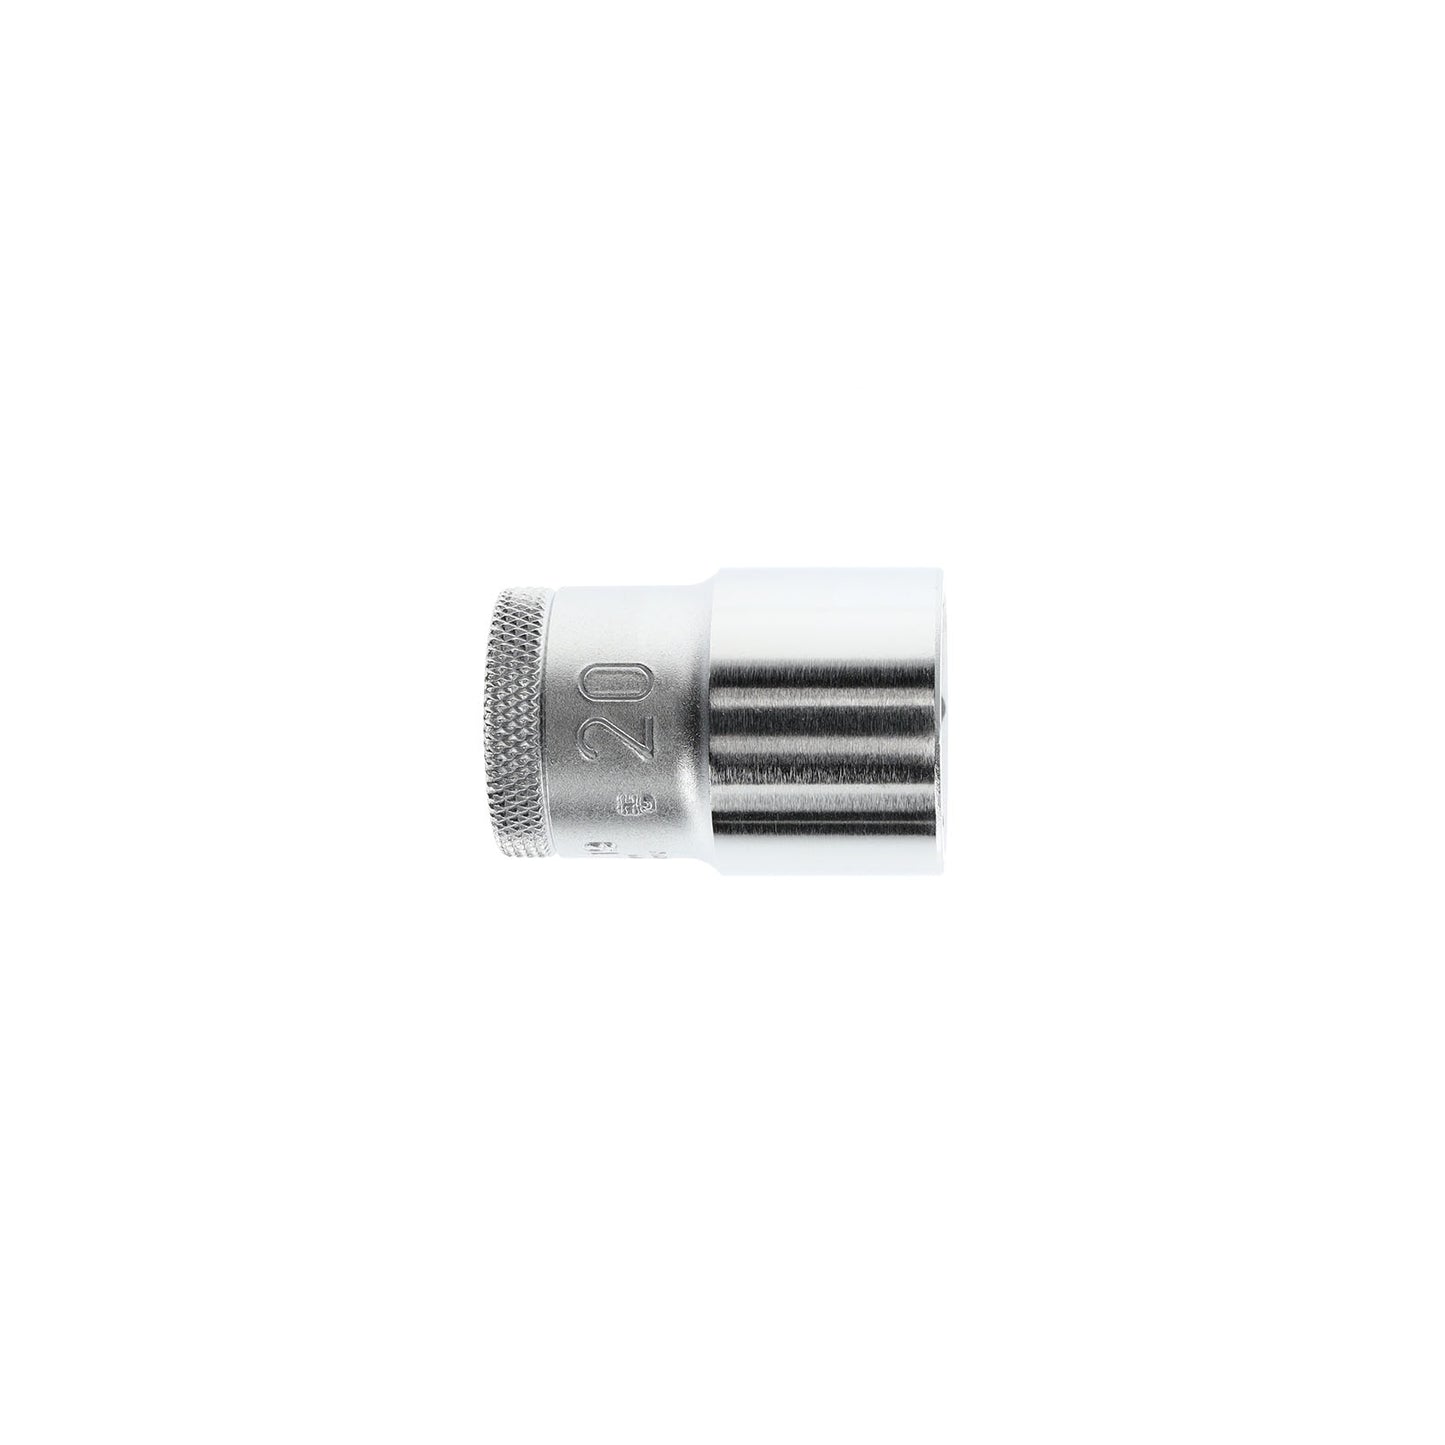 GEDORE 19 20 - Hexagonal Socket 1/2", 20mm (6131420)